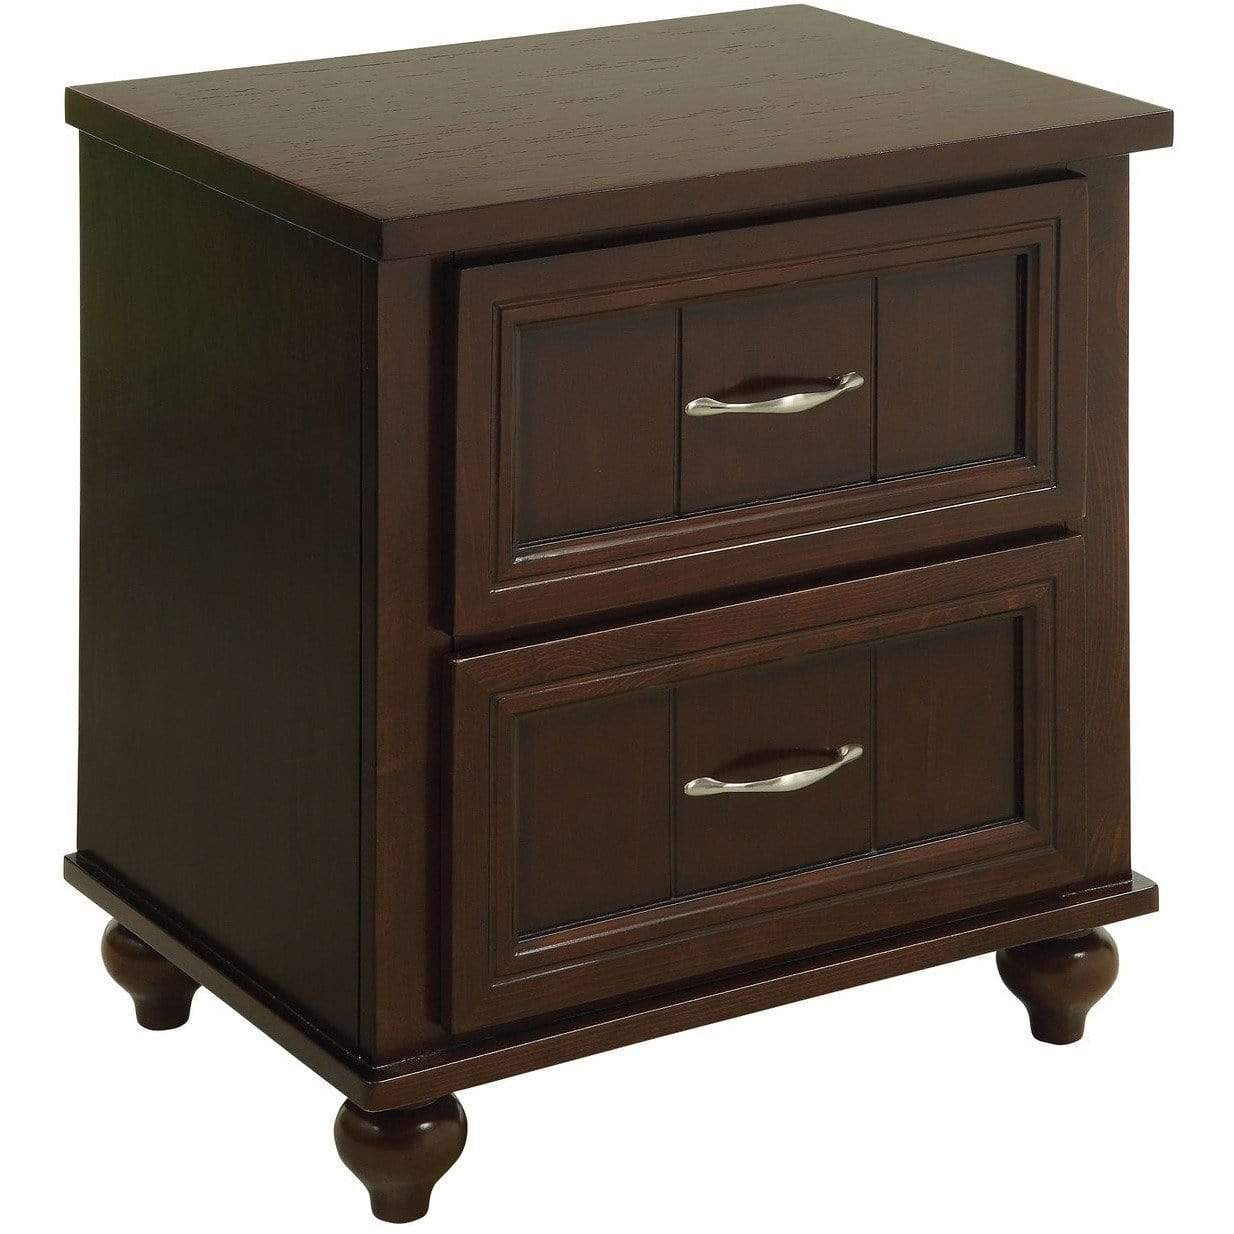 Furniture of America Nightstand Tiara Transitional 2 drawer youth nightstand Tiara Transitional 2 drawer youth nightstand